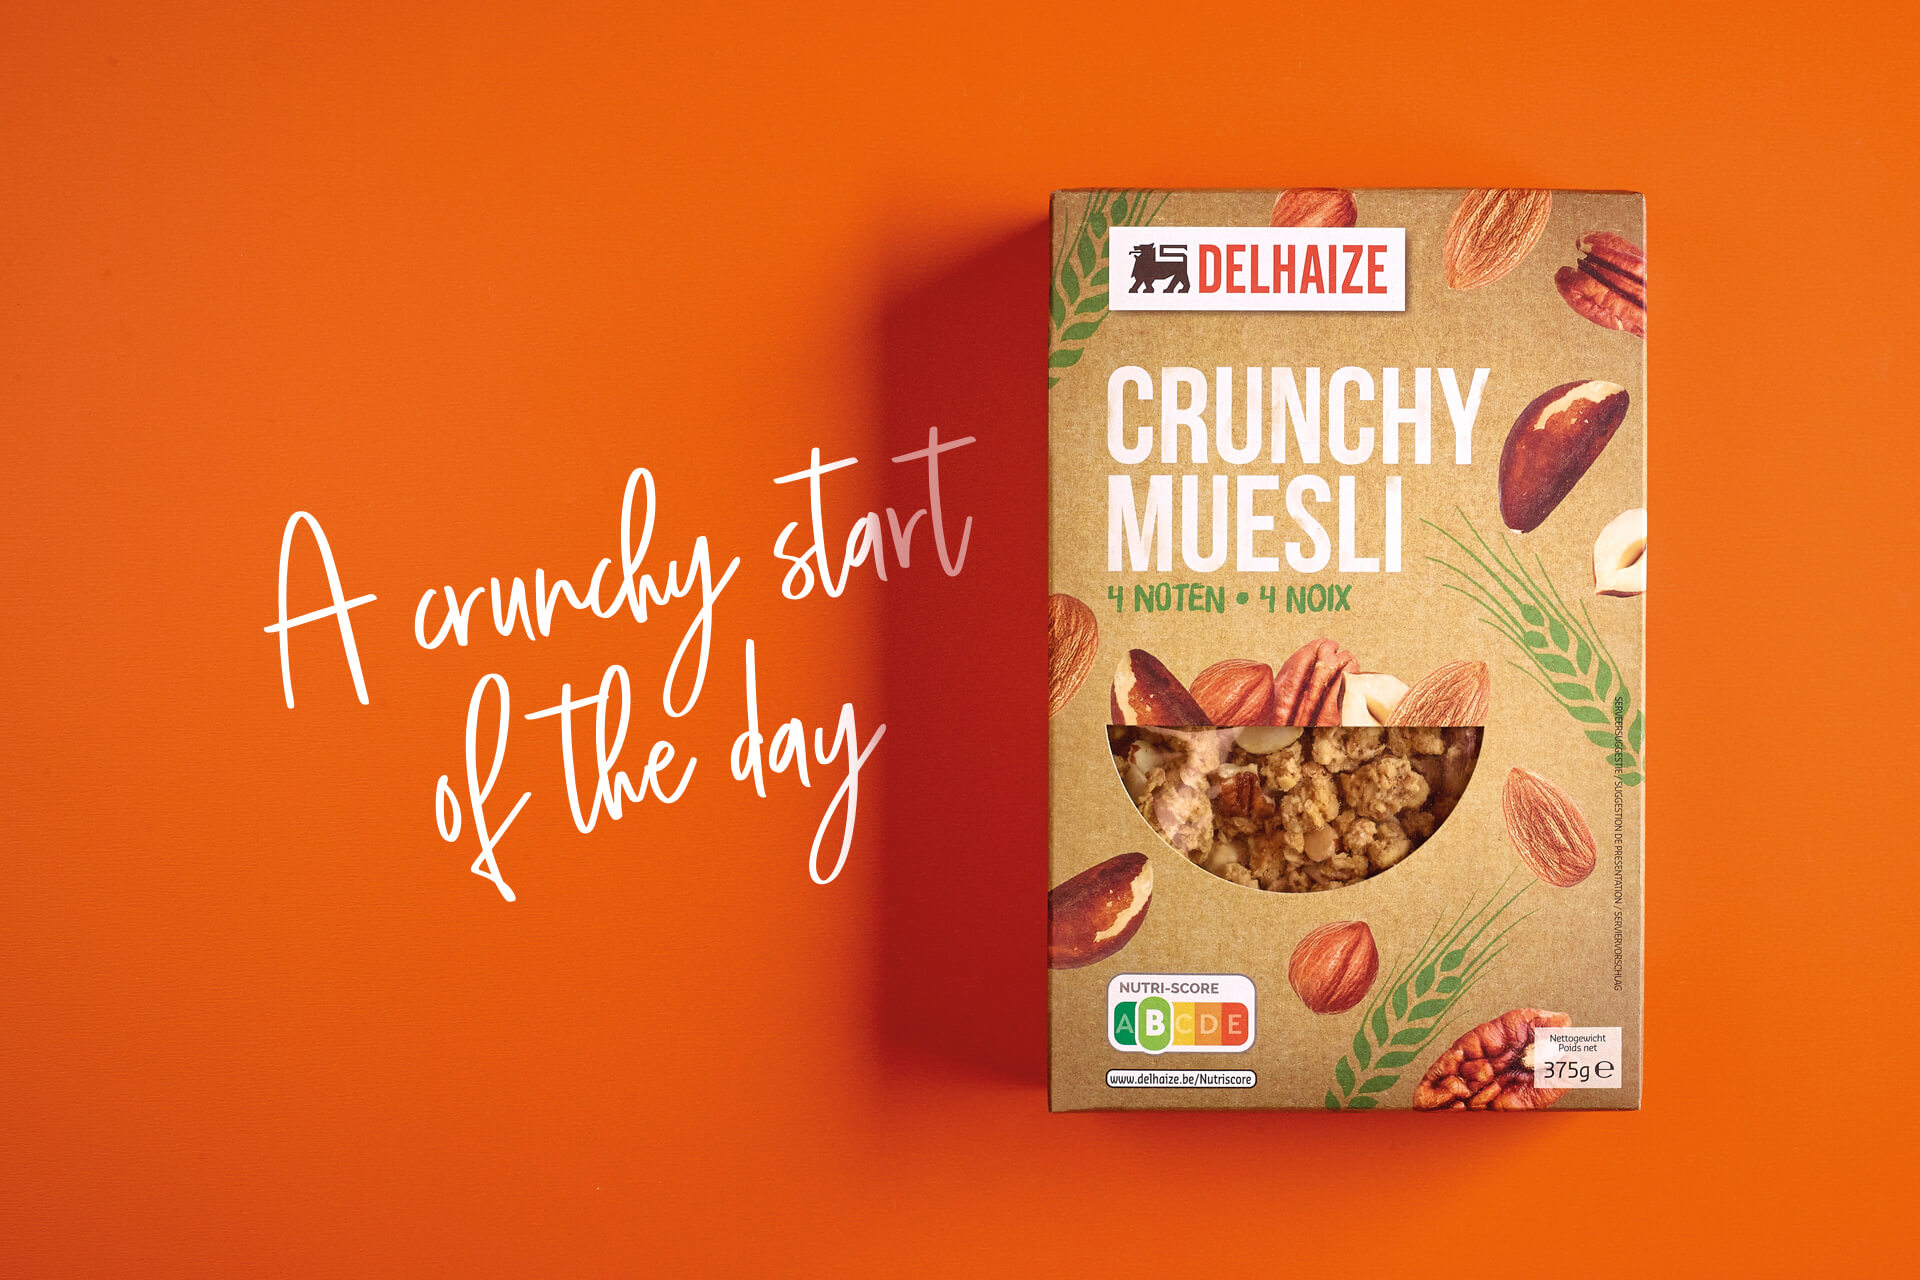 Delhaize Crunchy Muesli Packaging